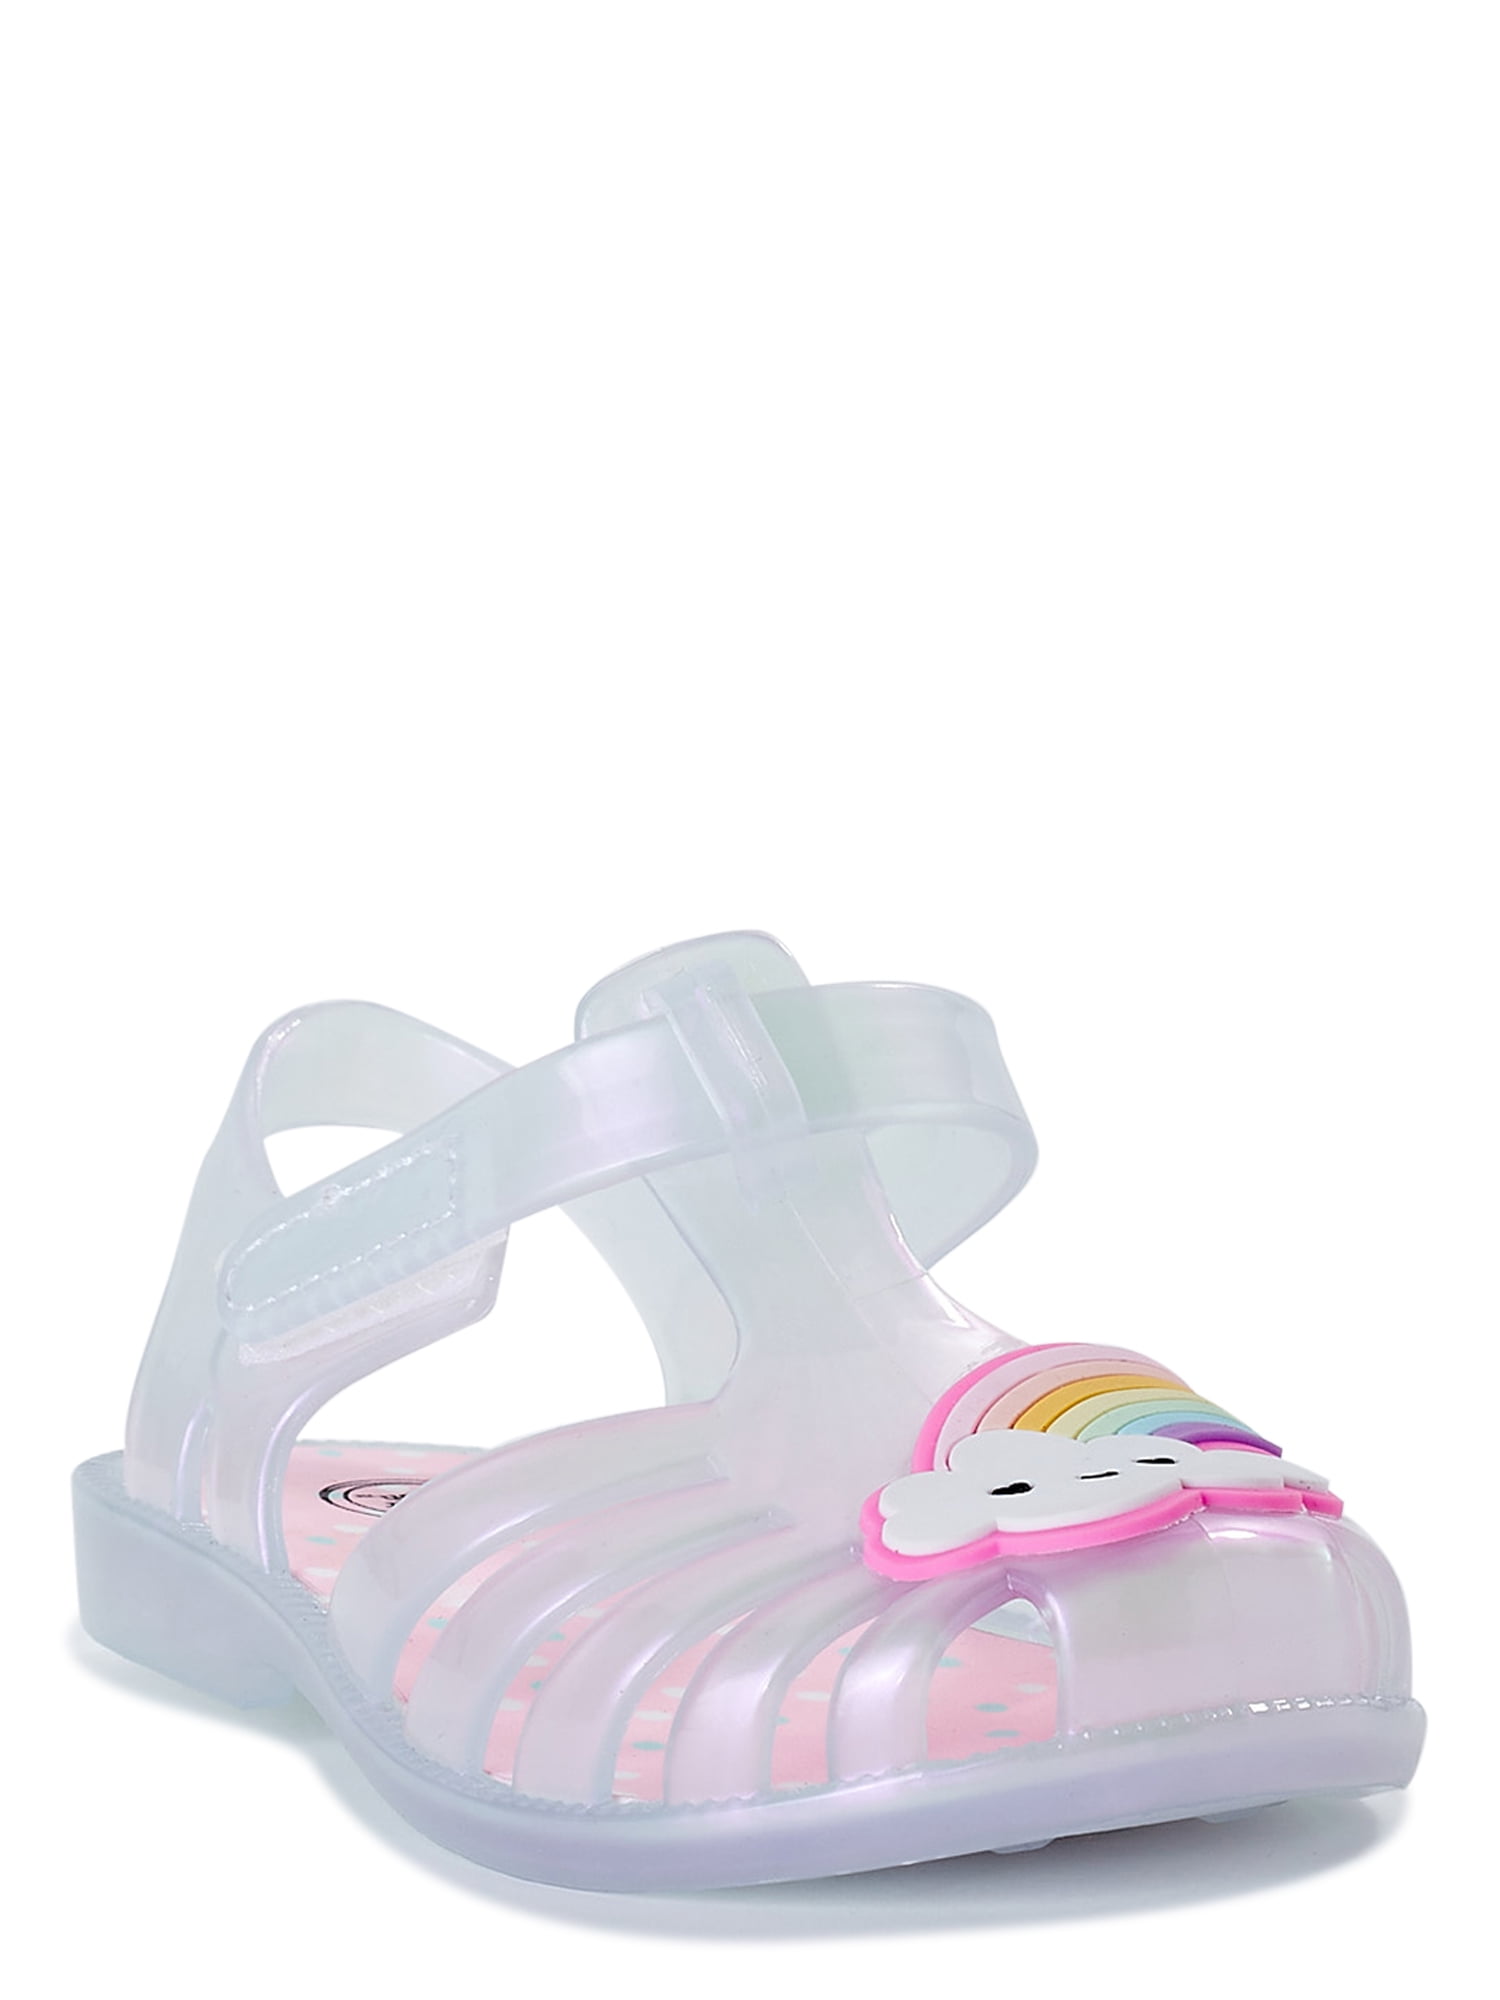 Mini Melissa Rainbow Sun Girls Princess Jelly Sandals Toddler Kid Shoes US 6-11 